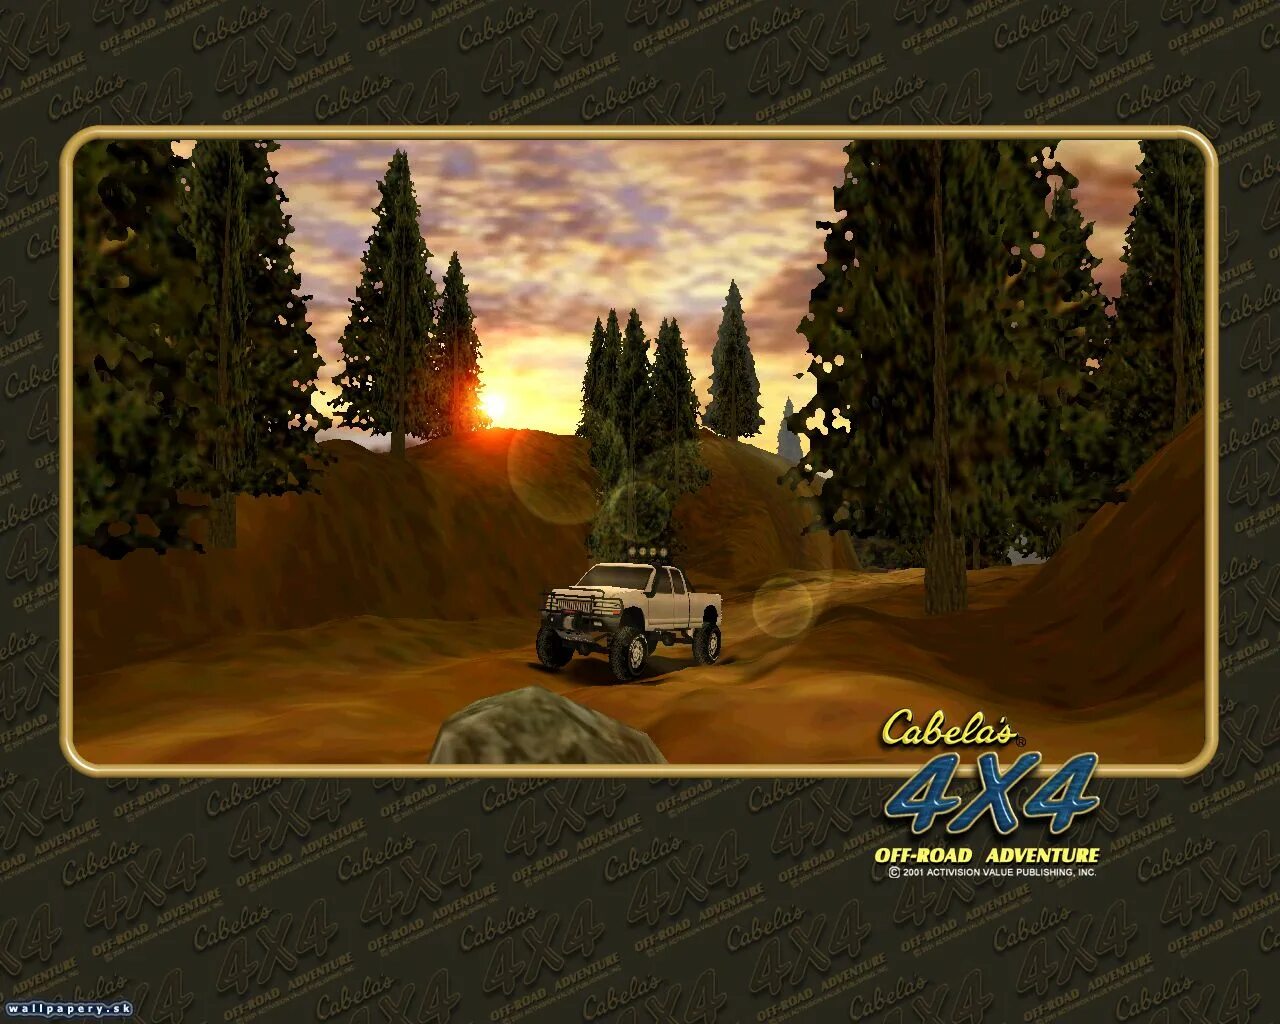 Cabela off road adventure. Cabela’s 4x4 off-Road Adventure. 4x4 off Road игра 2001. Cabela's 4x4 off Road Adventure игра 2001. Cabela's 4x4 off-Road Adventure 4.